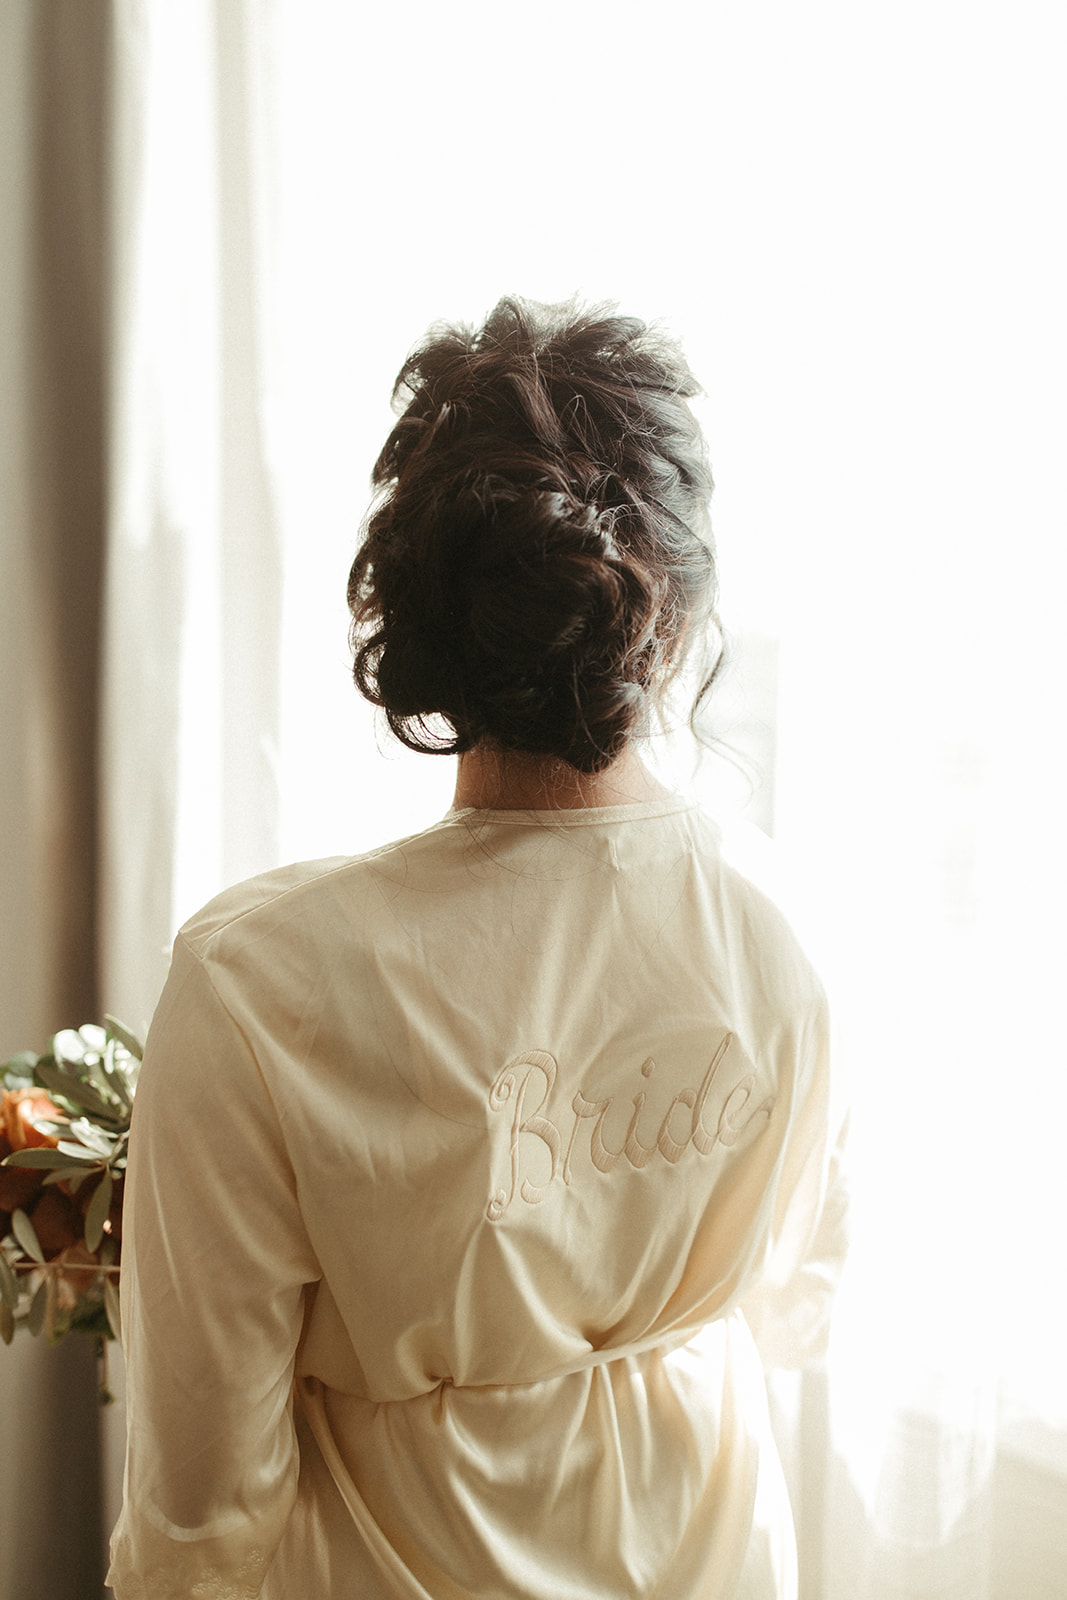 Bride gets ready for wedding in silk robe, bridal hair inspiration